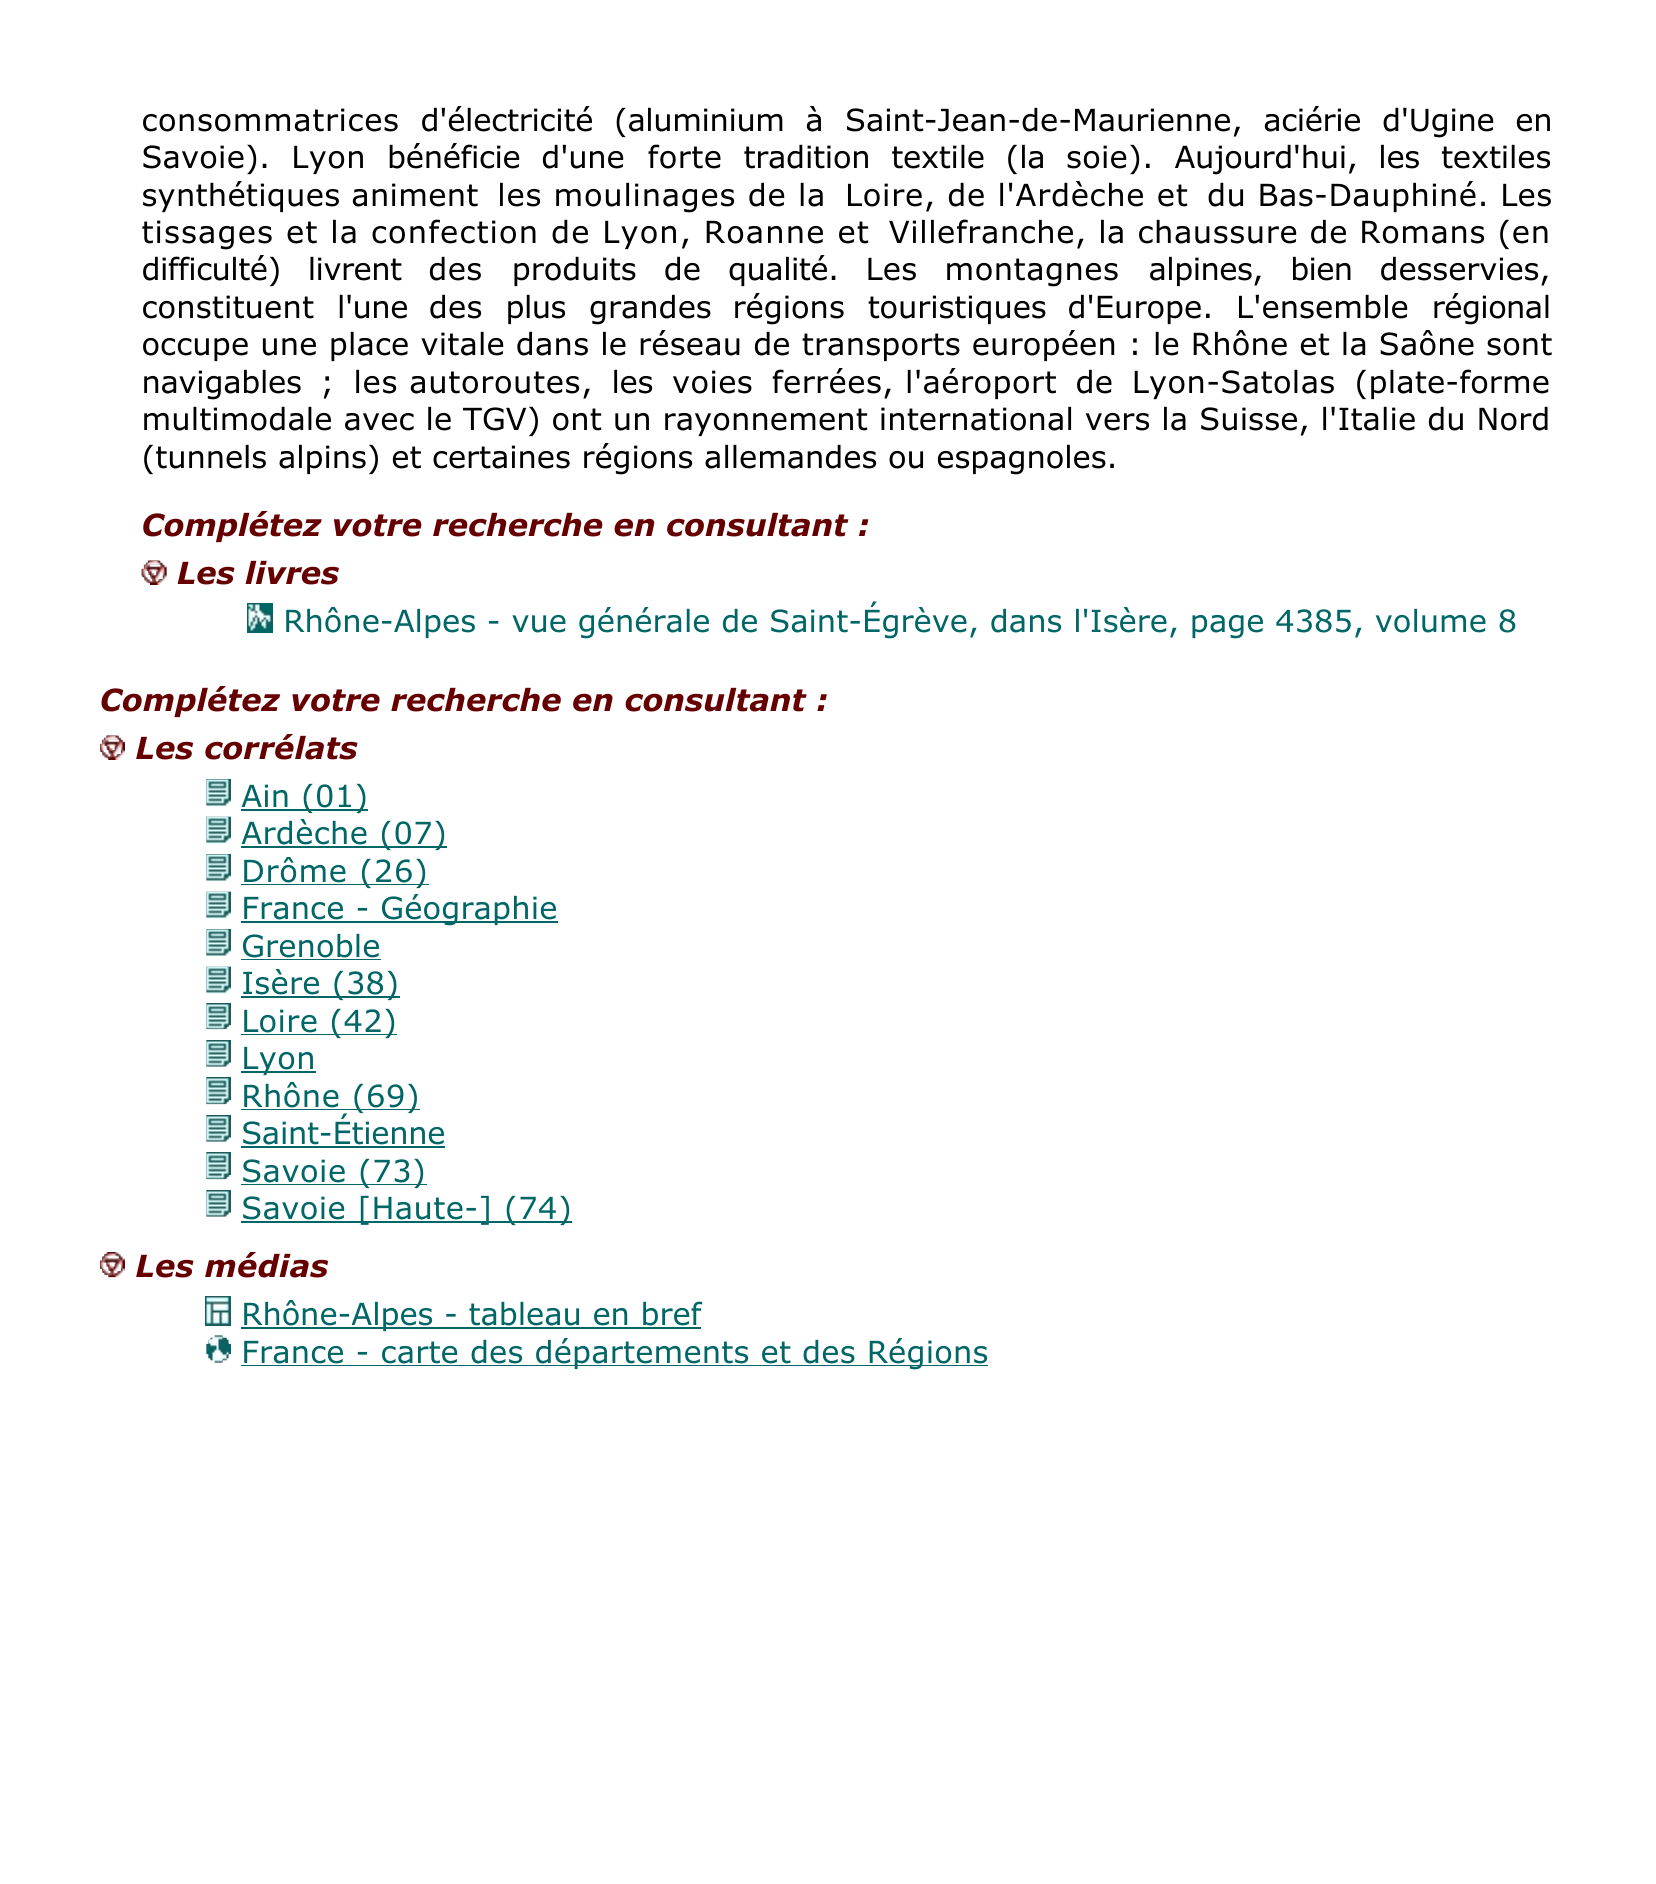 Prévisualisation du document Rhône-Alpes.